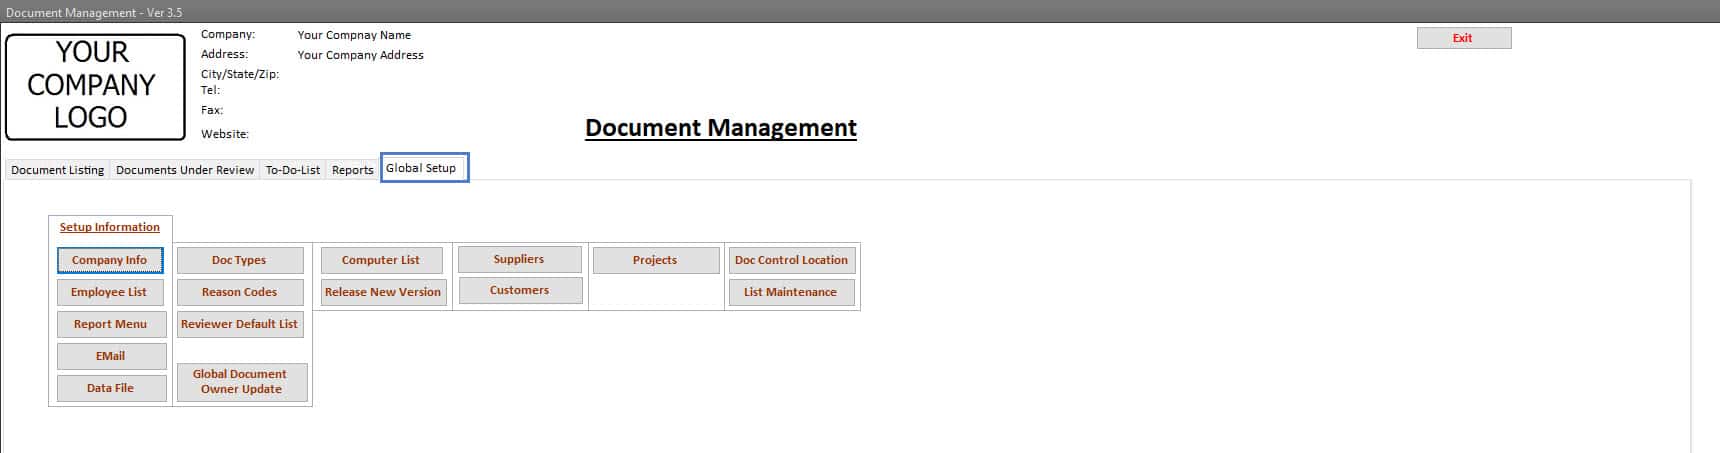 Document Management Setup